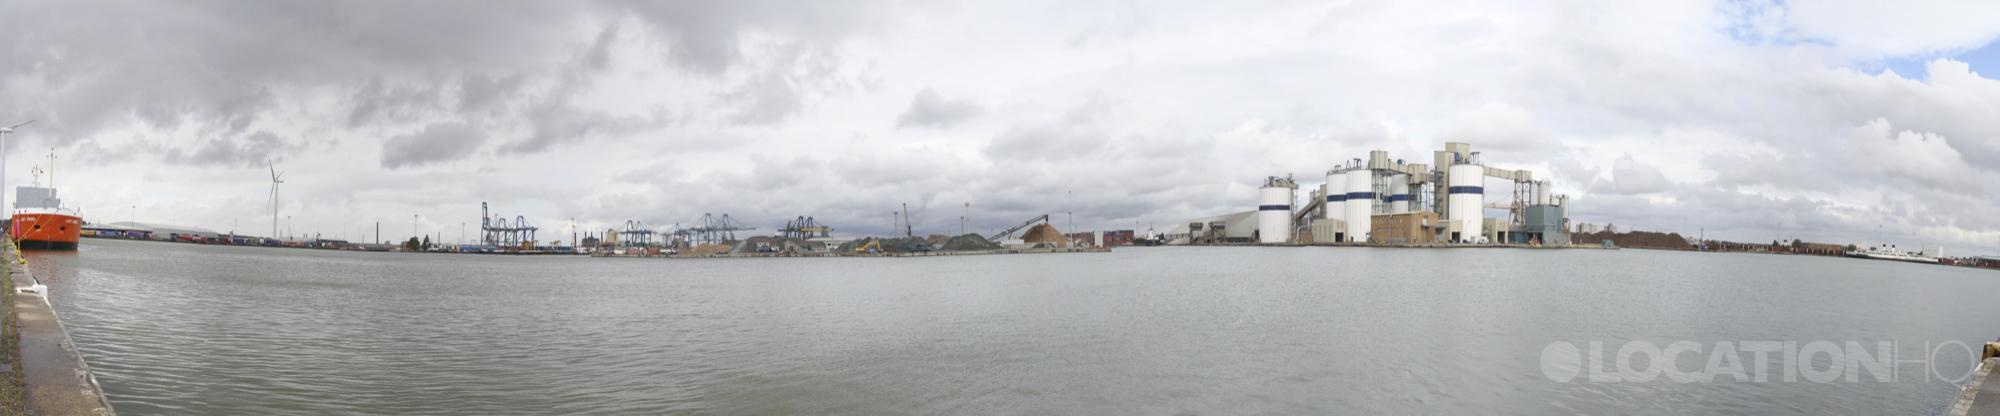 The Dockyard and Port image 3